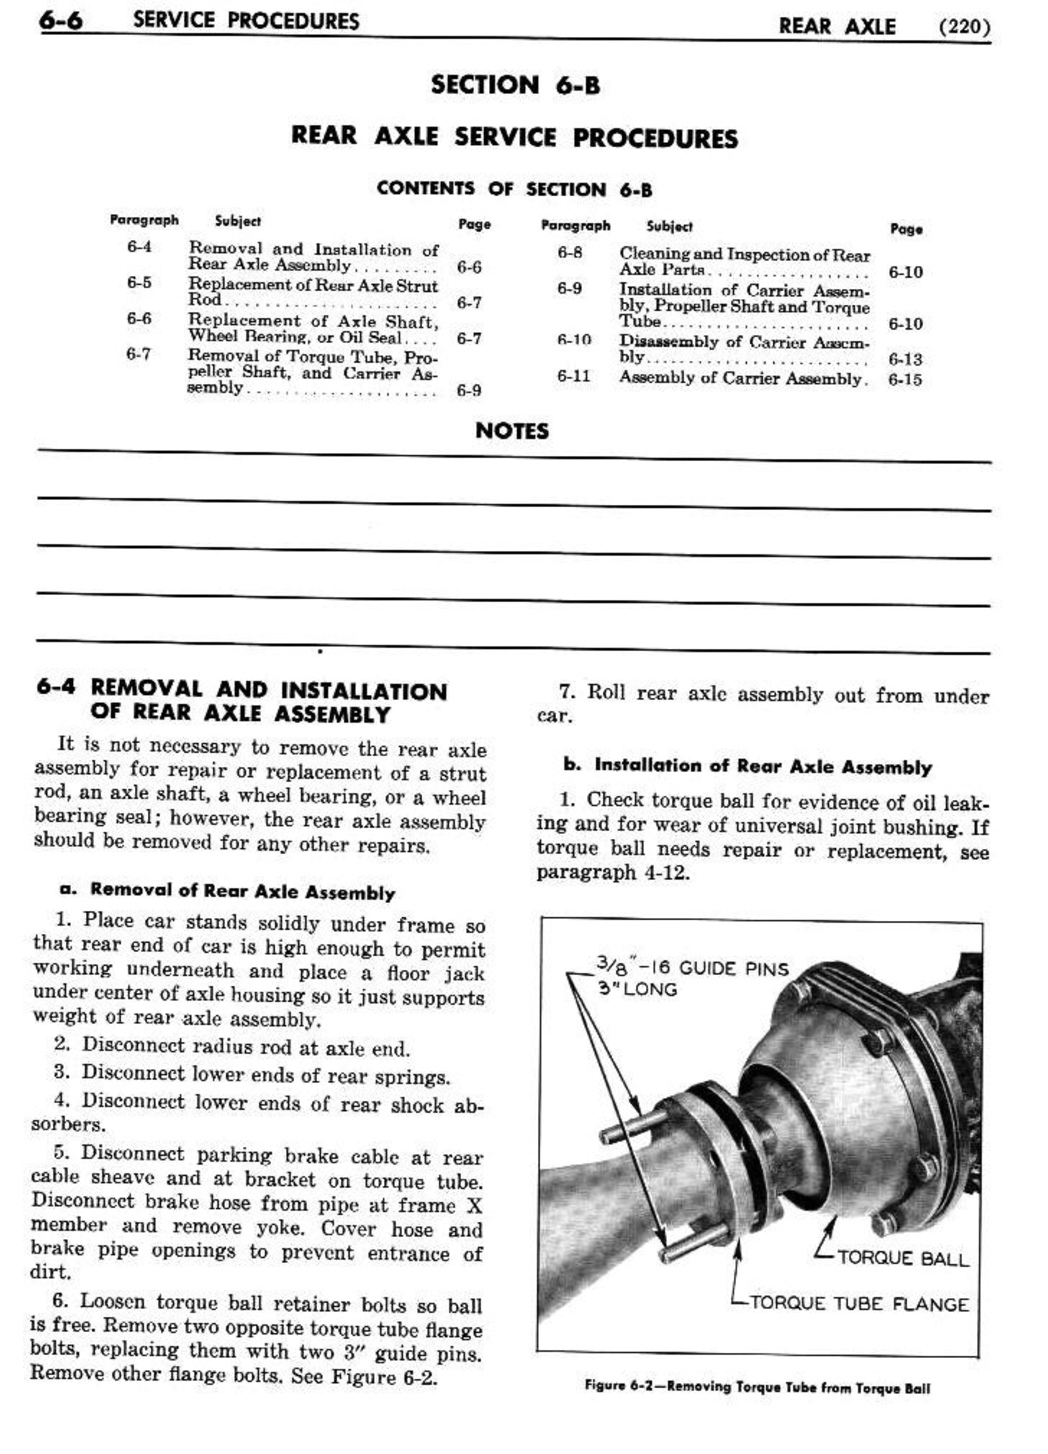 n_07 1956 Buick Shop Manual - Rear Axle-006-006.jpg